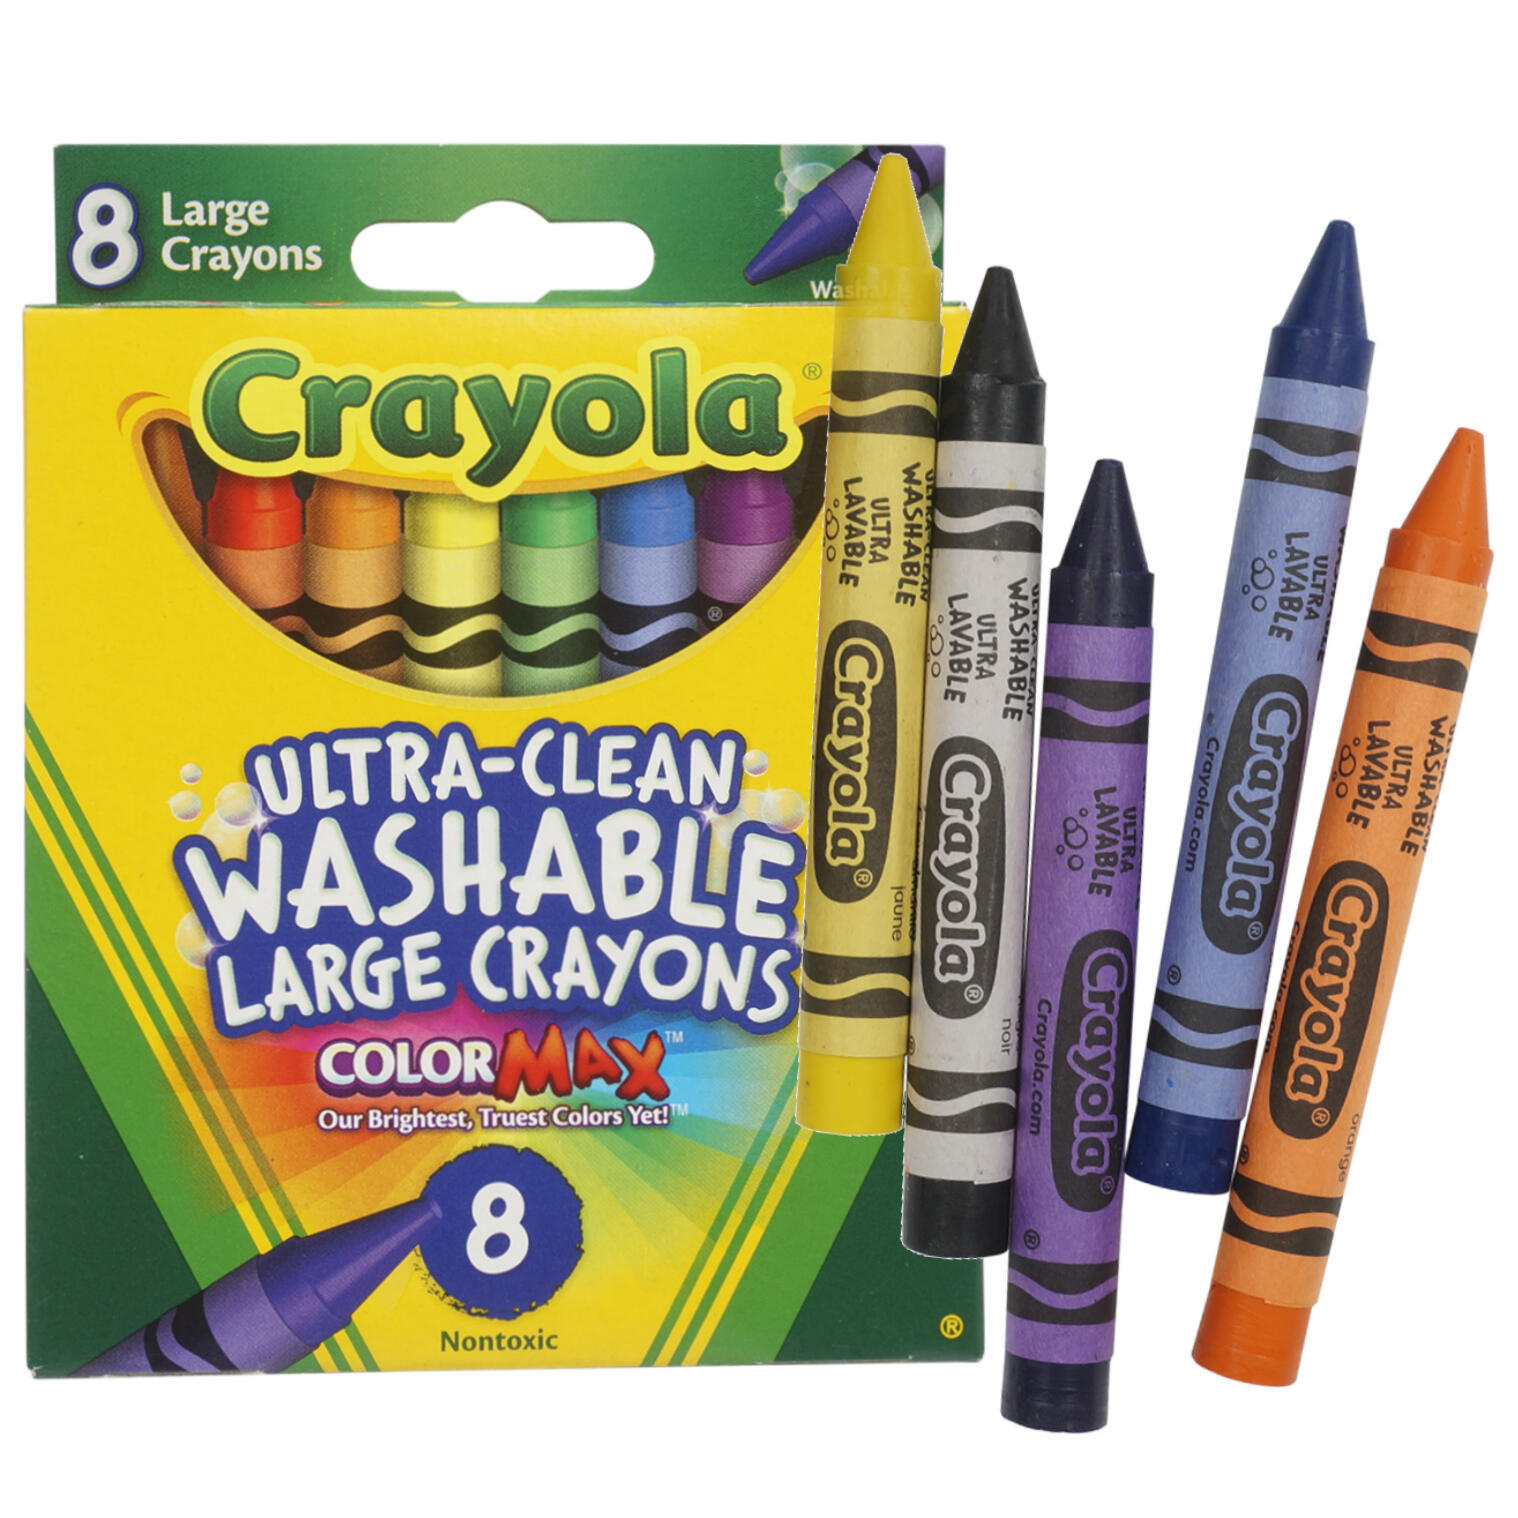 Nontoxic ColorMax Crayola Crayons 8 Large Ultra Clean Washable Crayons